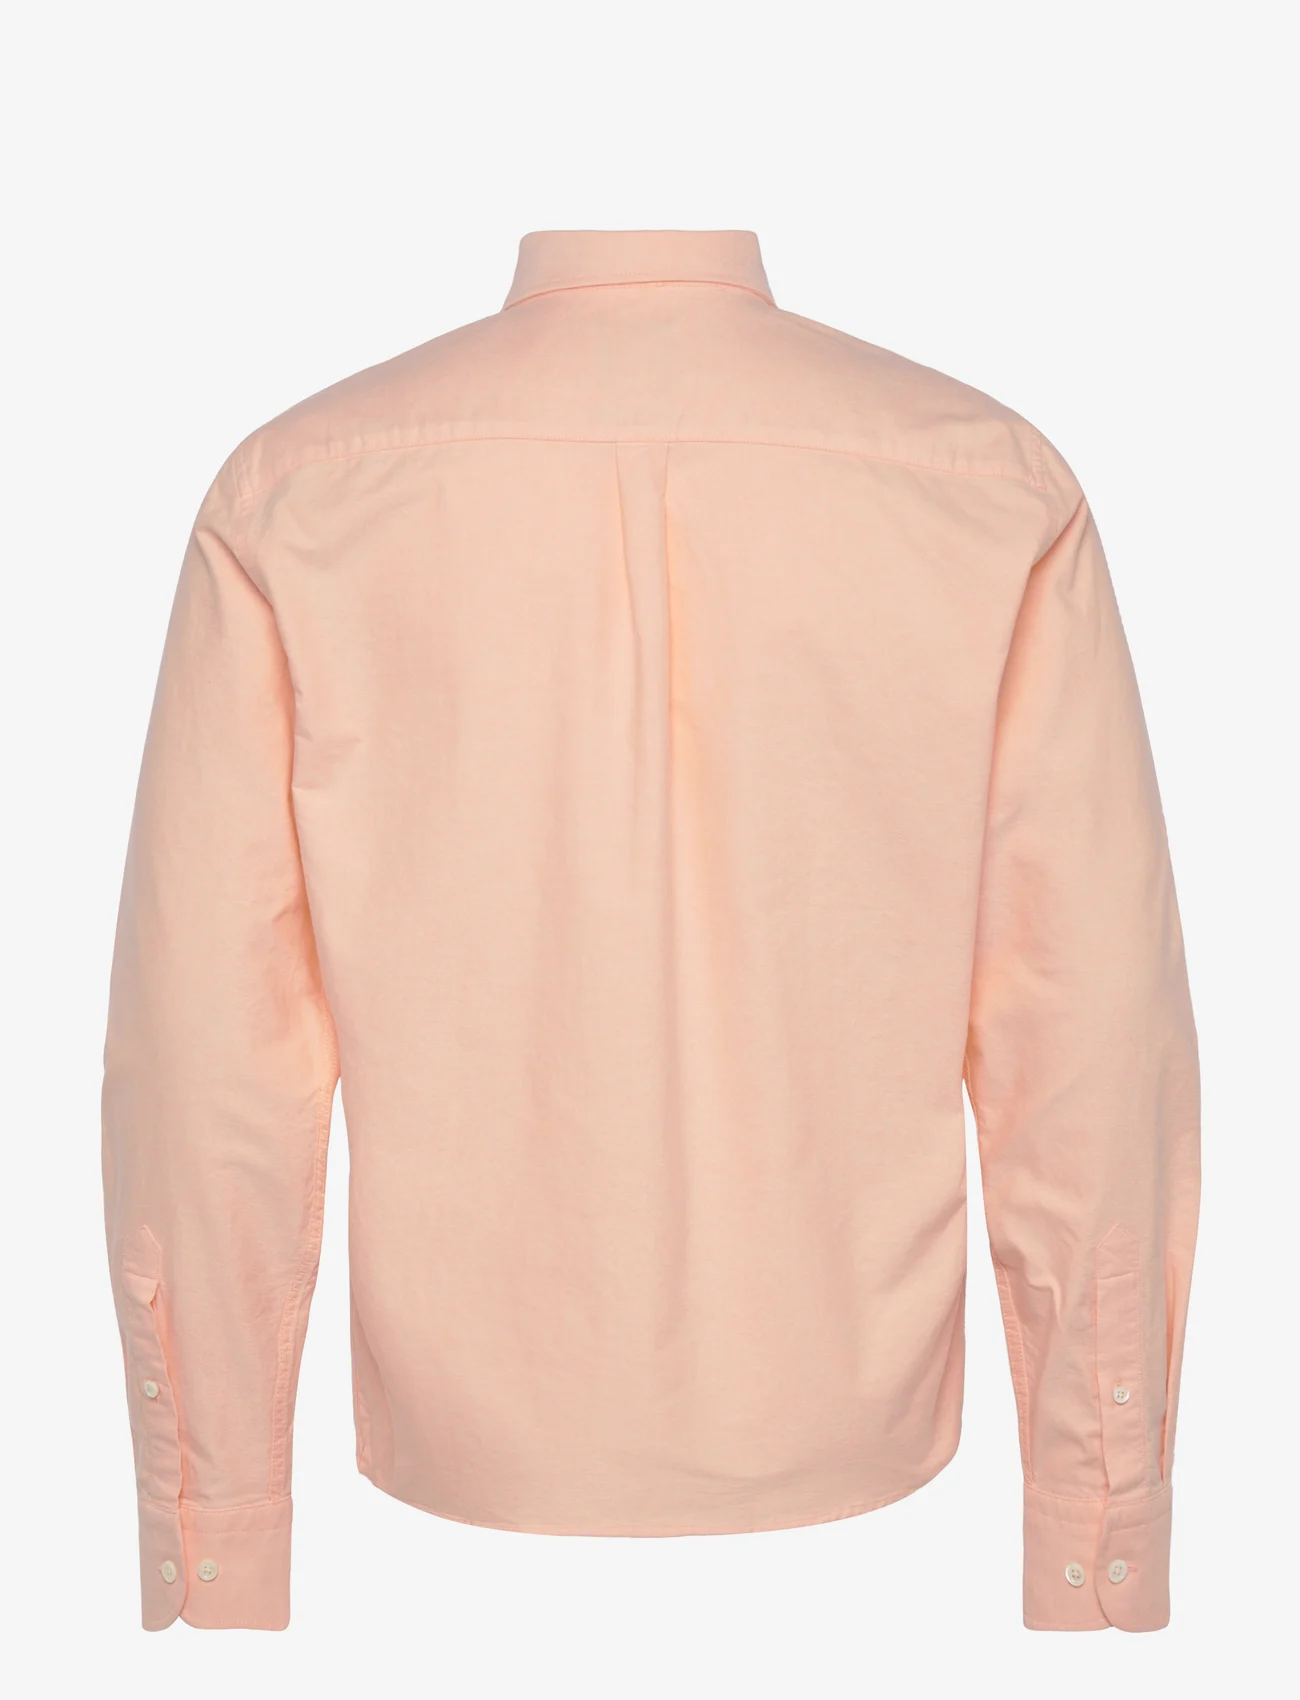 Oscar Jacobson - Reg Fit BD Casual Oxford - basic skjorter - orange flower - 1